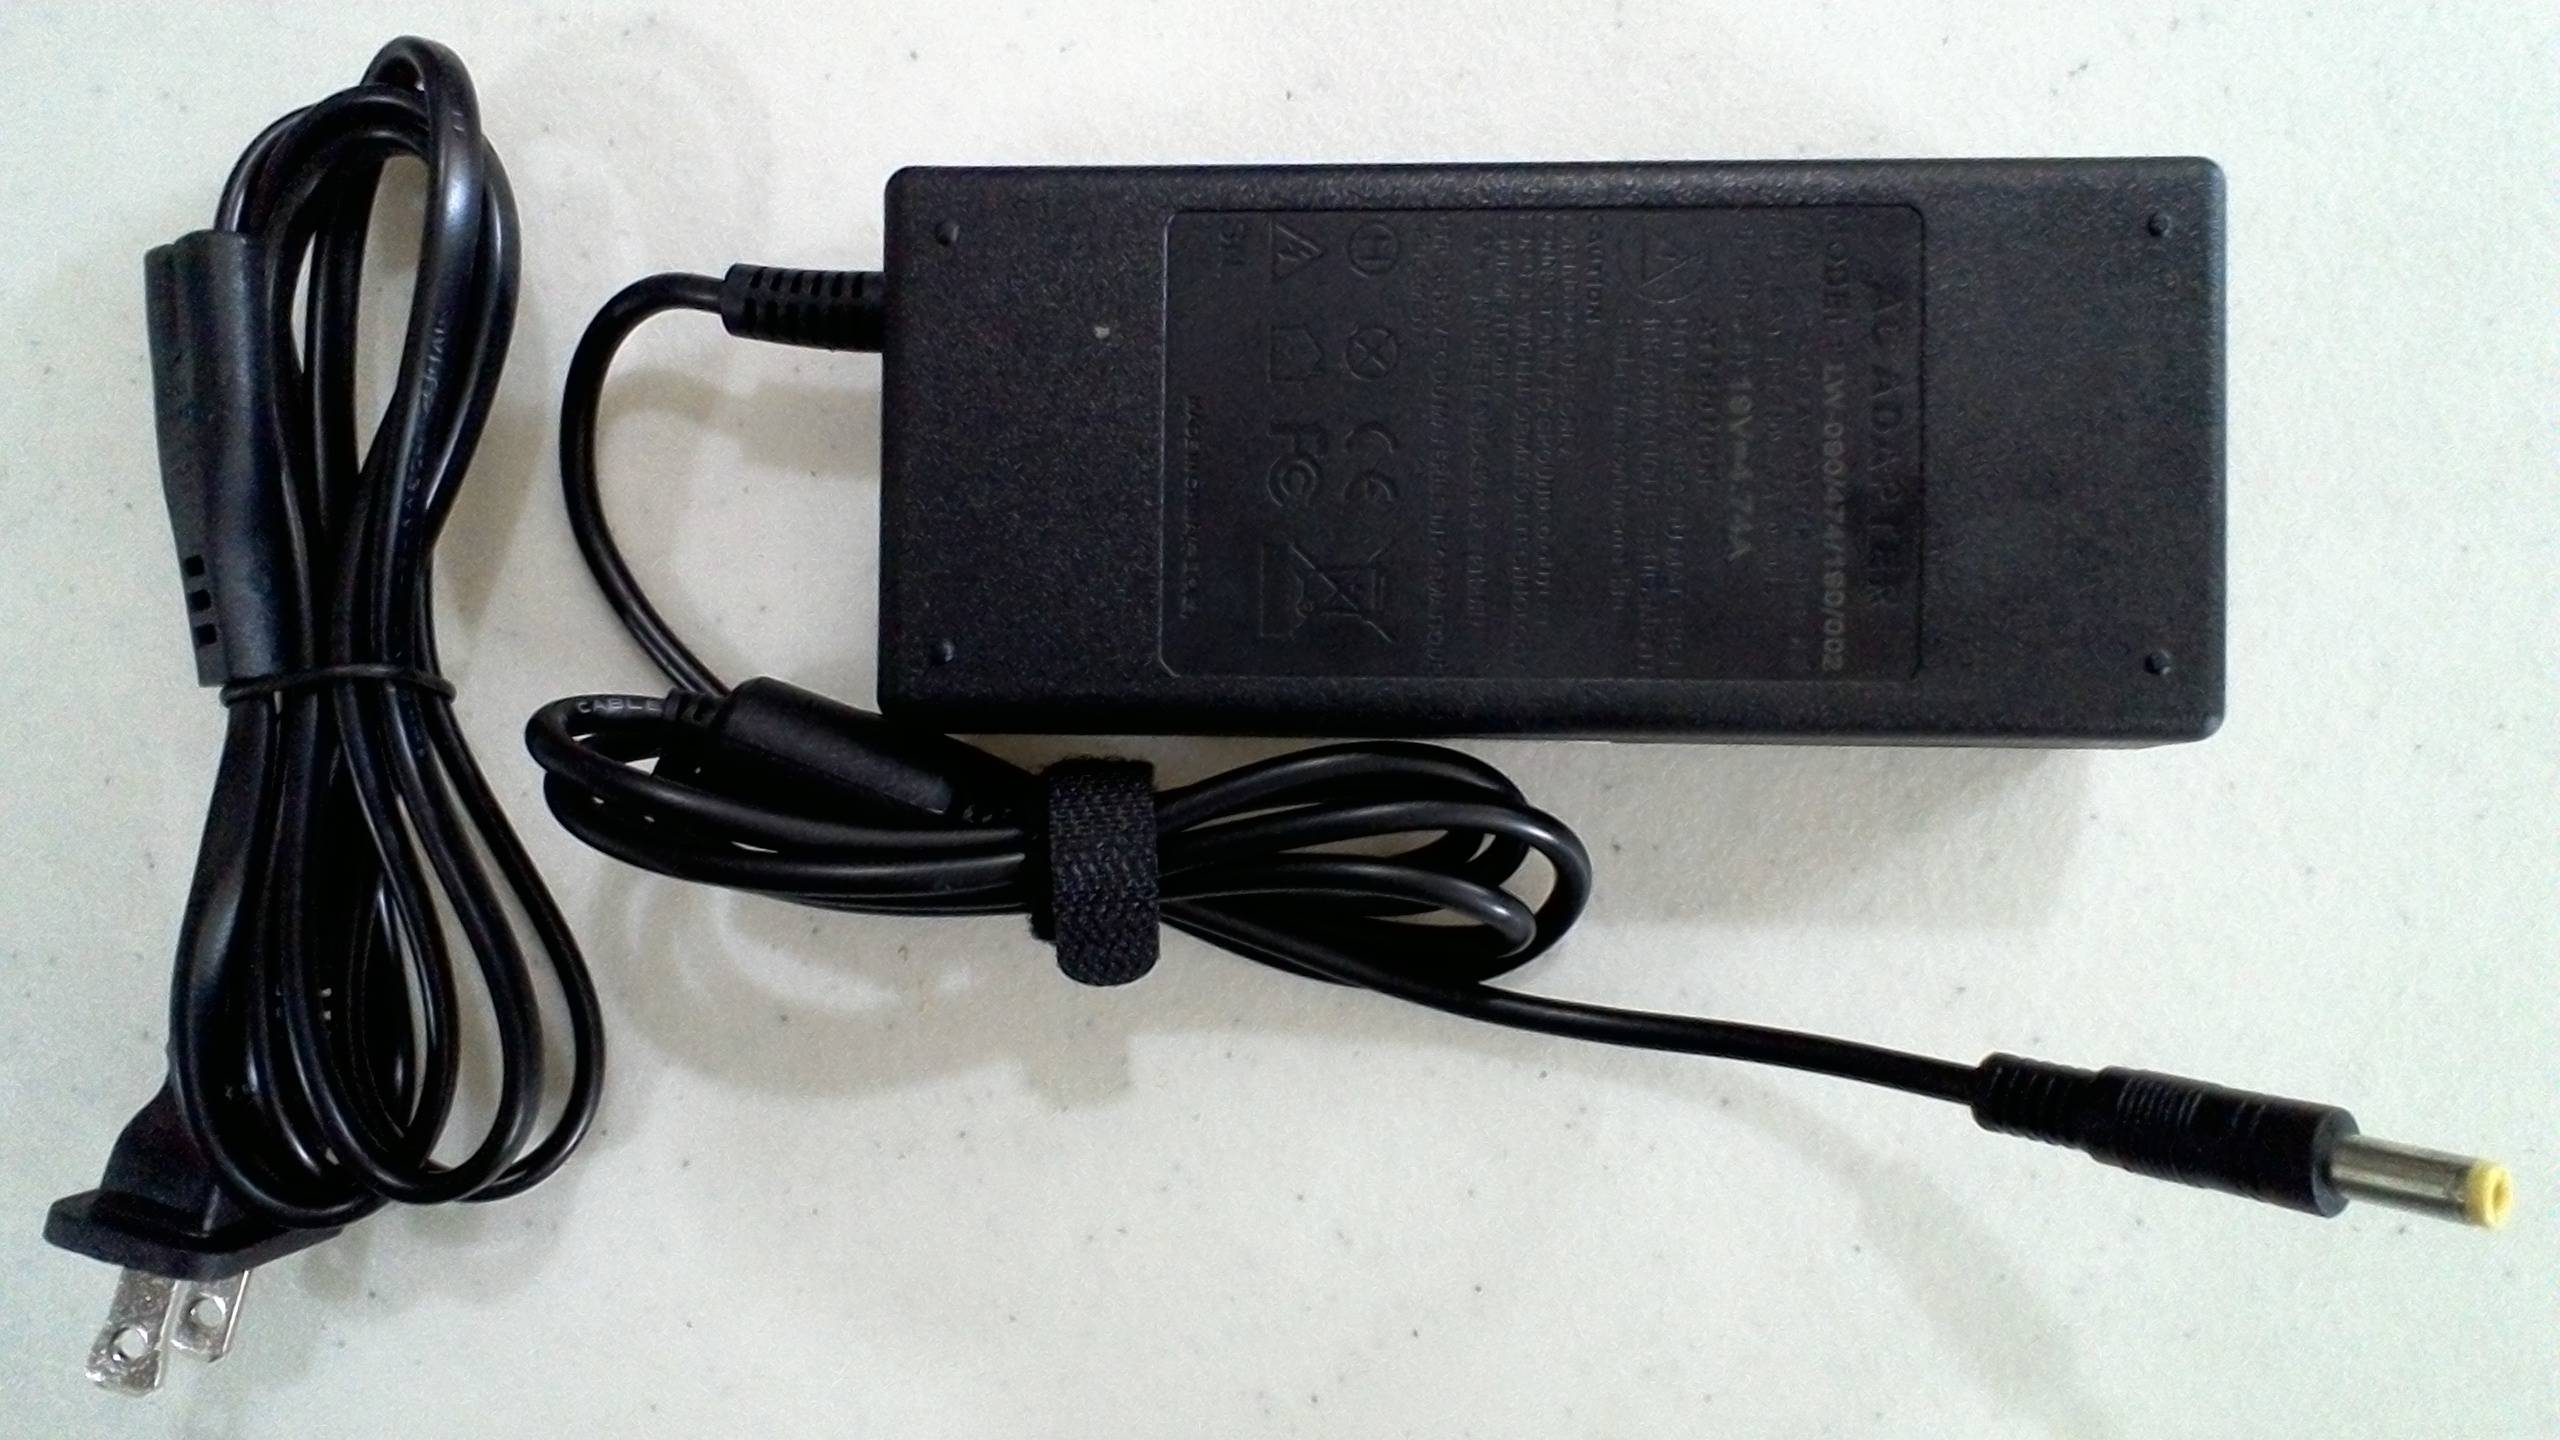 2m USB Cargador con Cable de alimentación de 5V Negro Adaptador para Toshiba Journe Aire Marco De Foto 